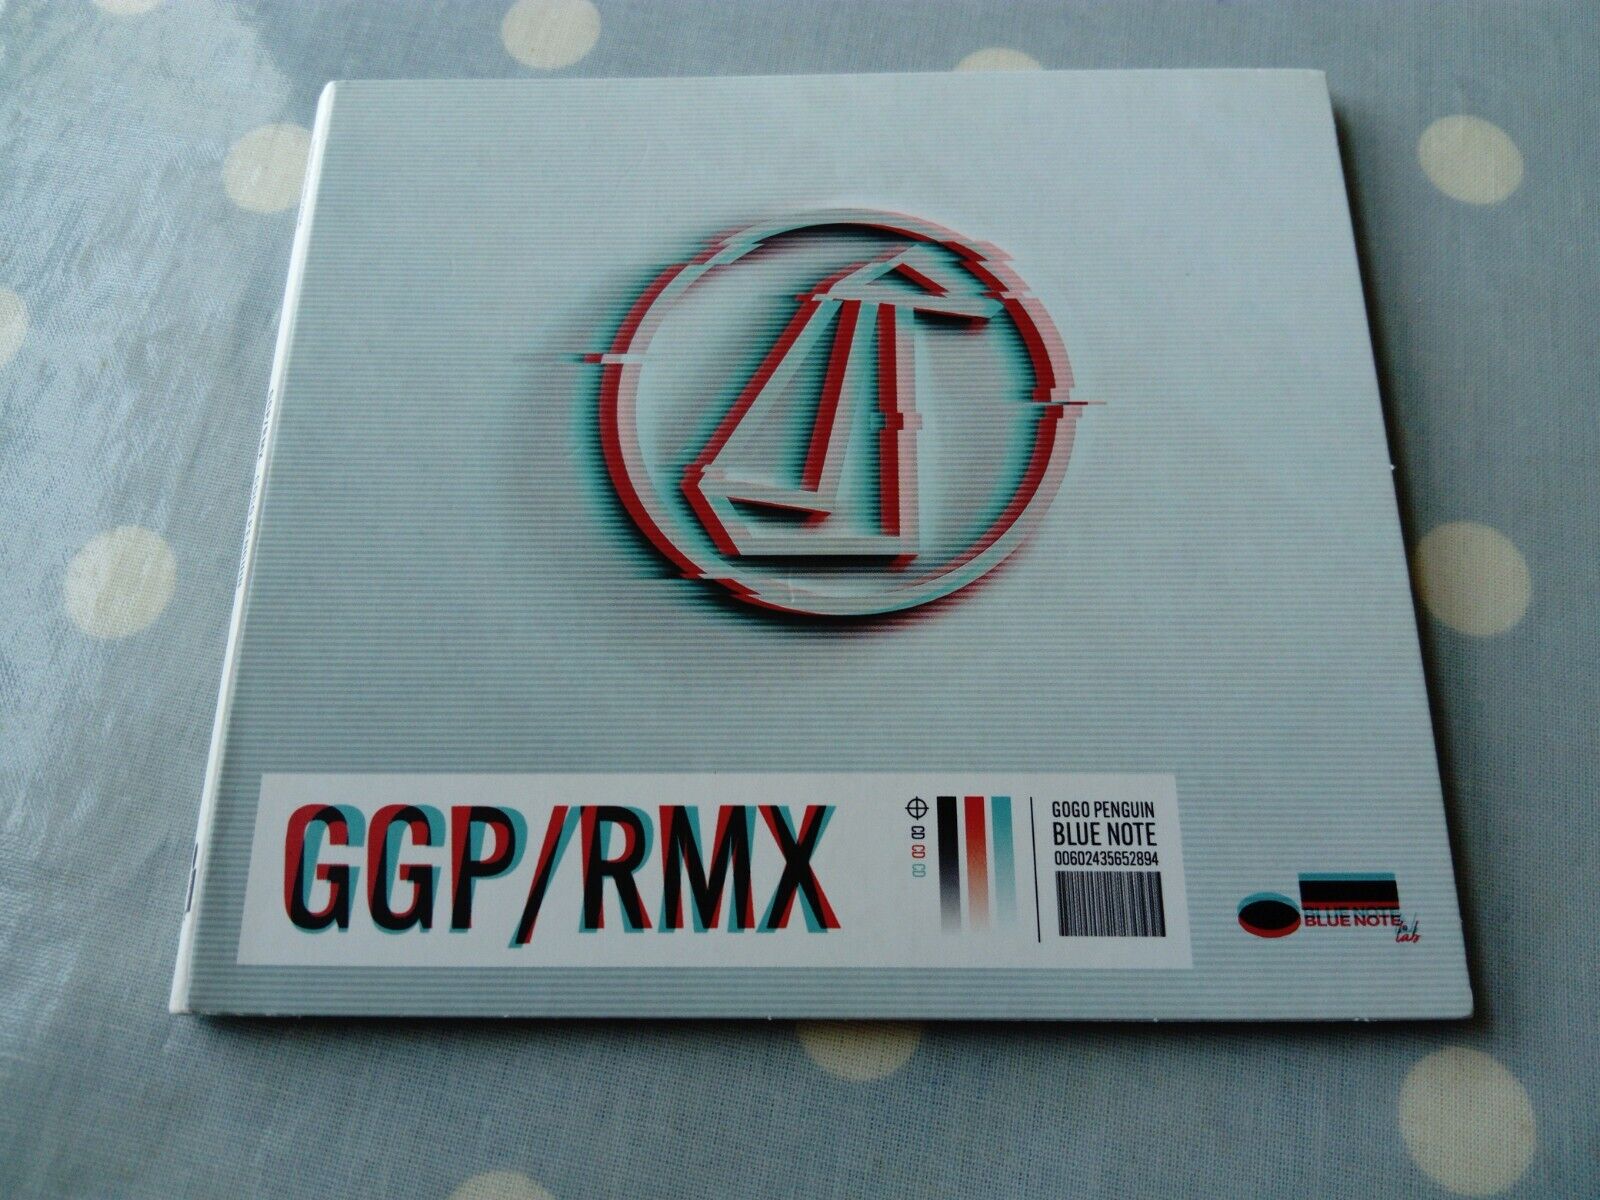 GoGo Penguin GGP/RMX 11 Track Card Sleeve CD (Blue Note)